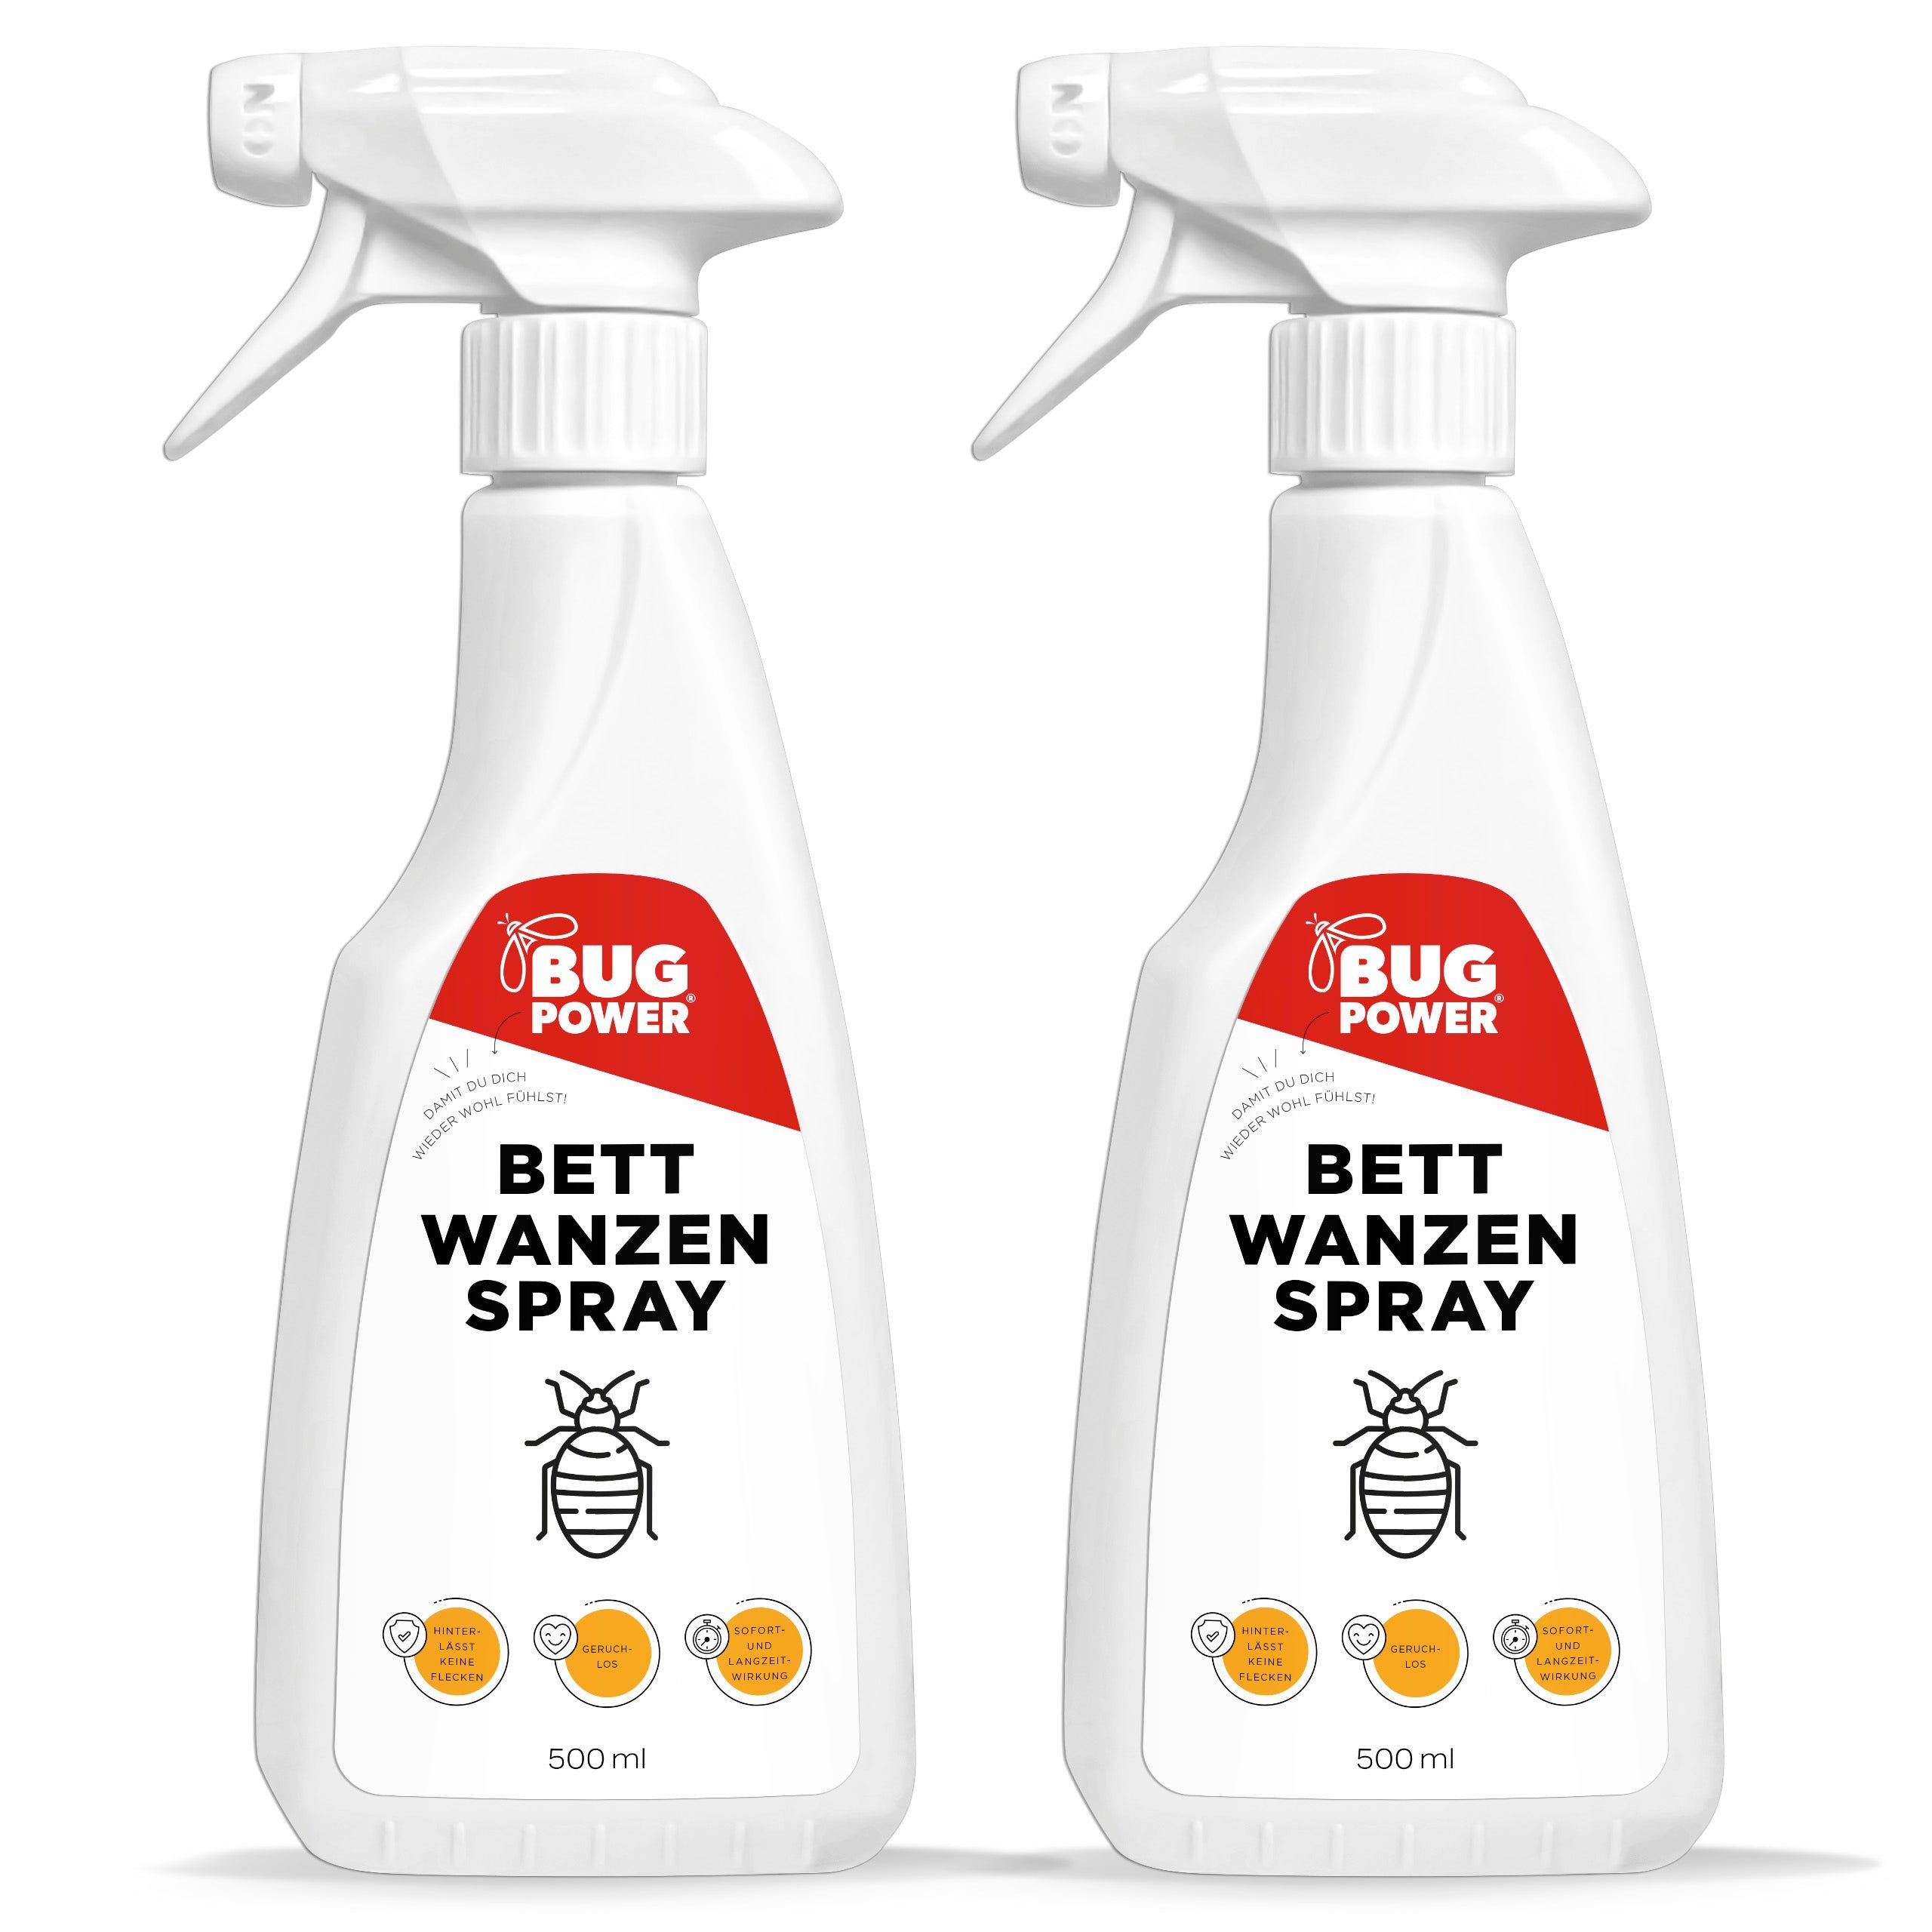 BugPower Bettwanzen Spray